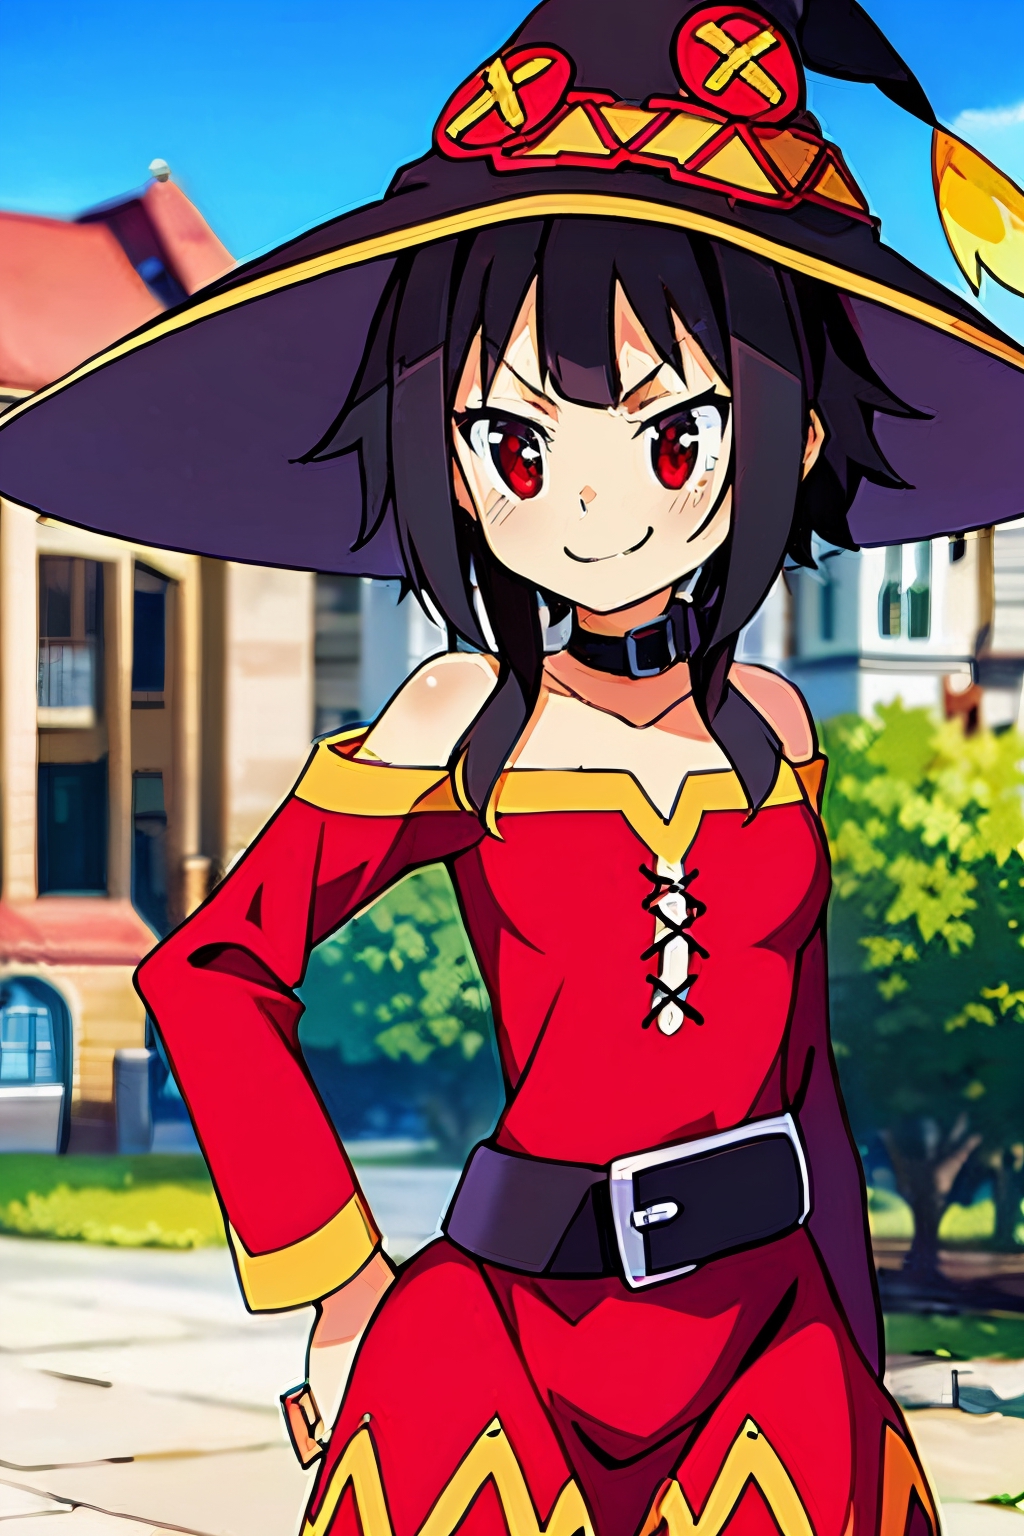 Megumin - Konosuba Anime Character - v1.0